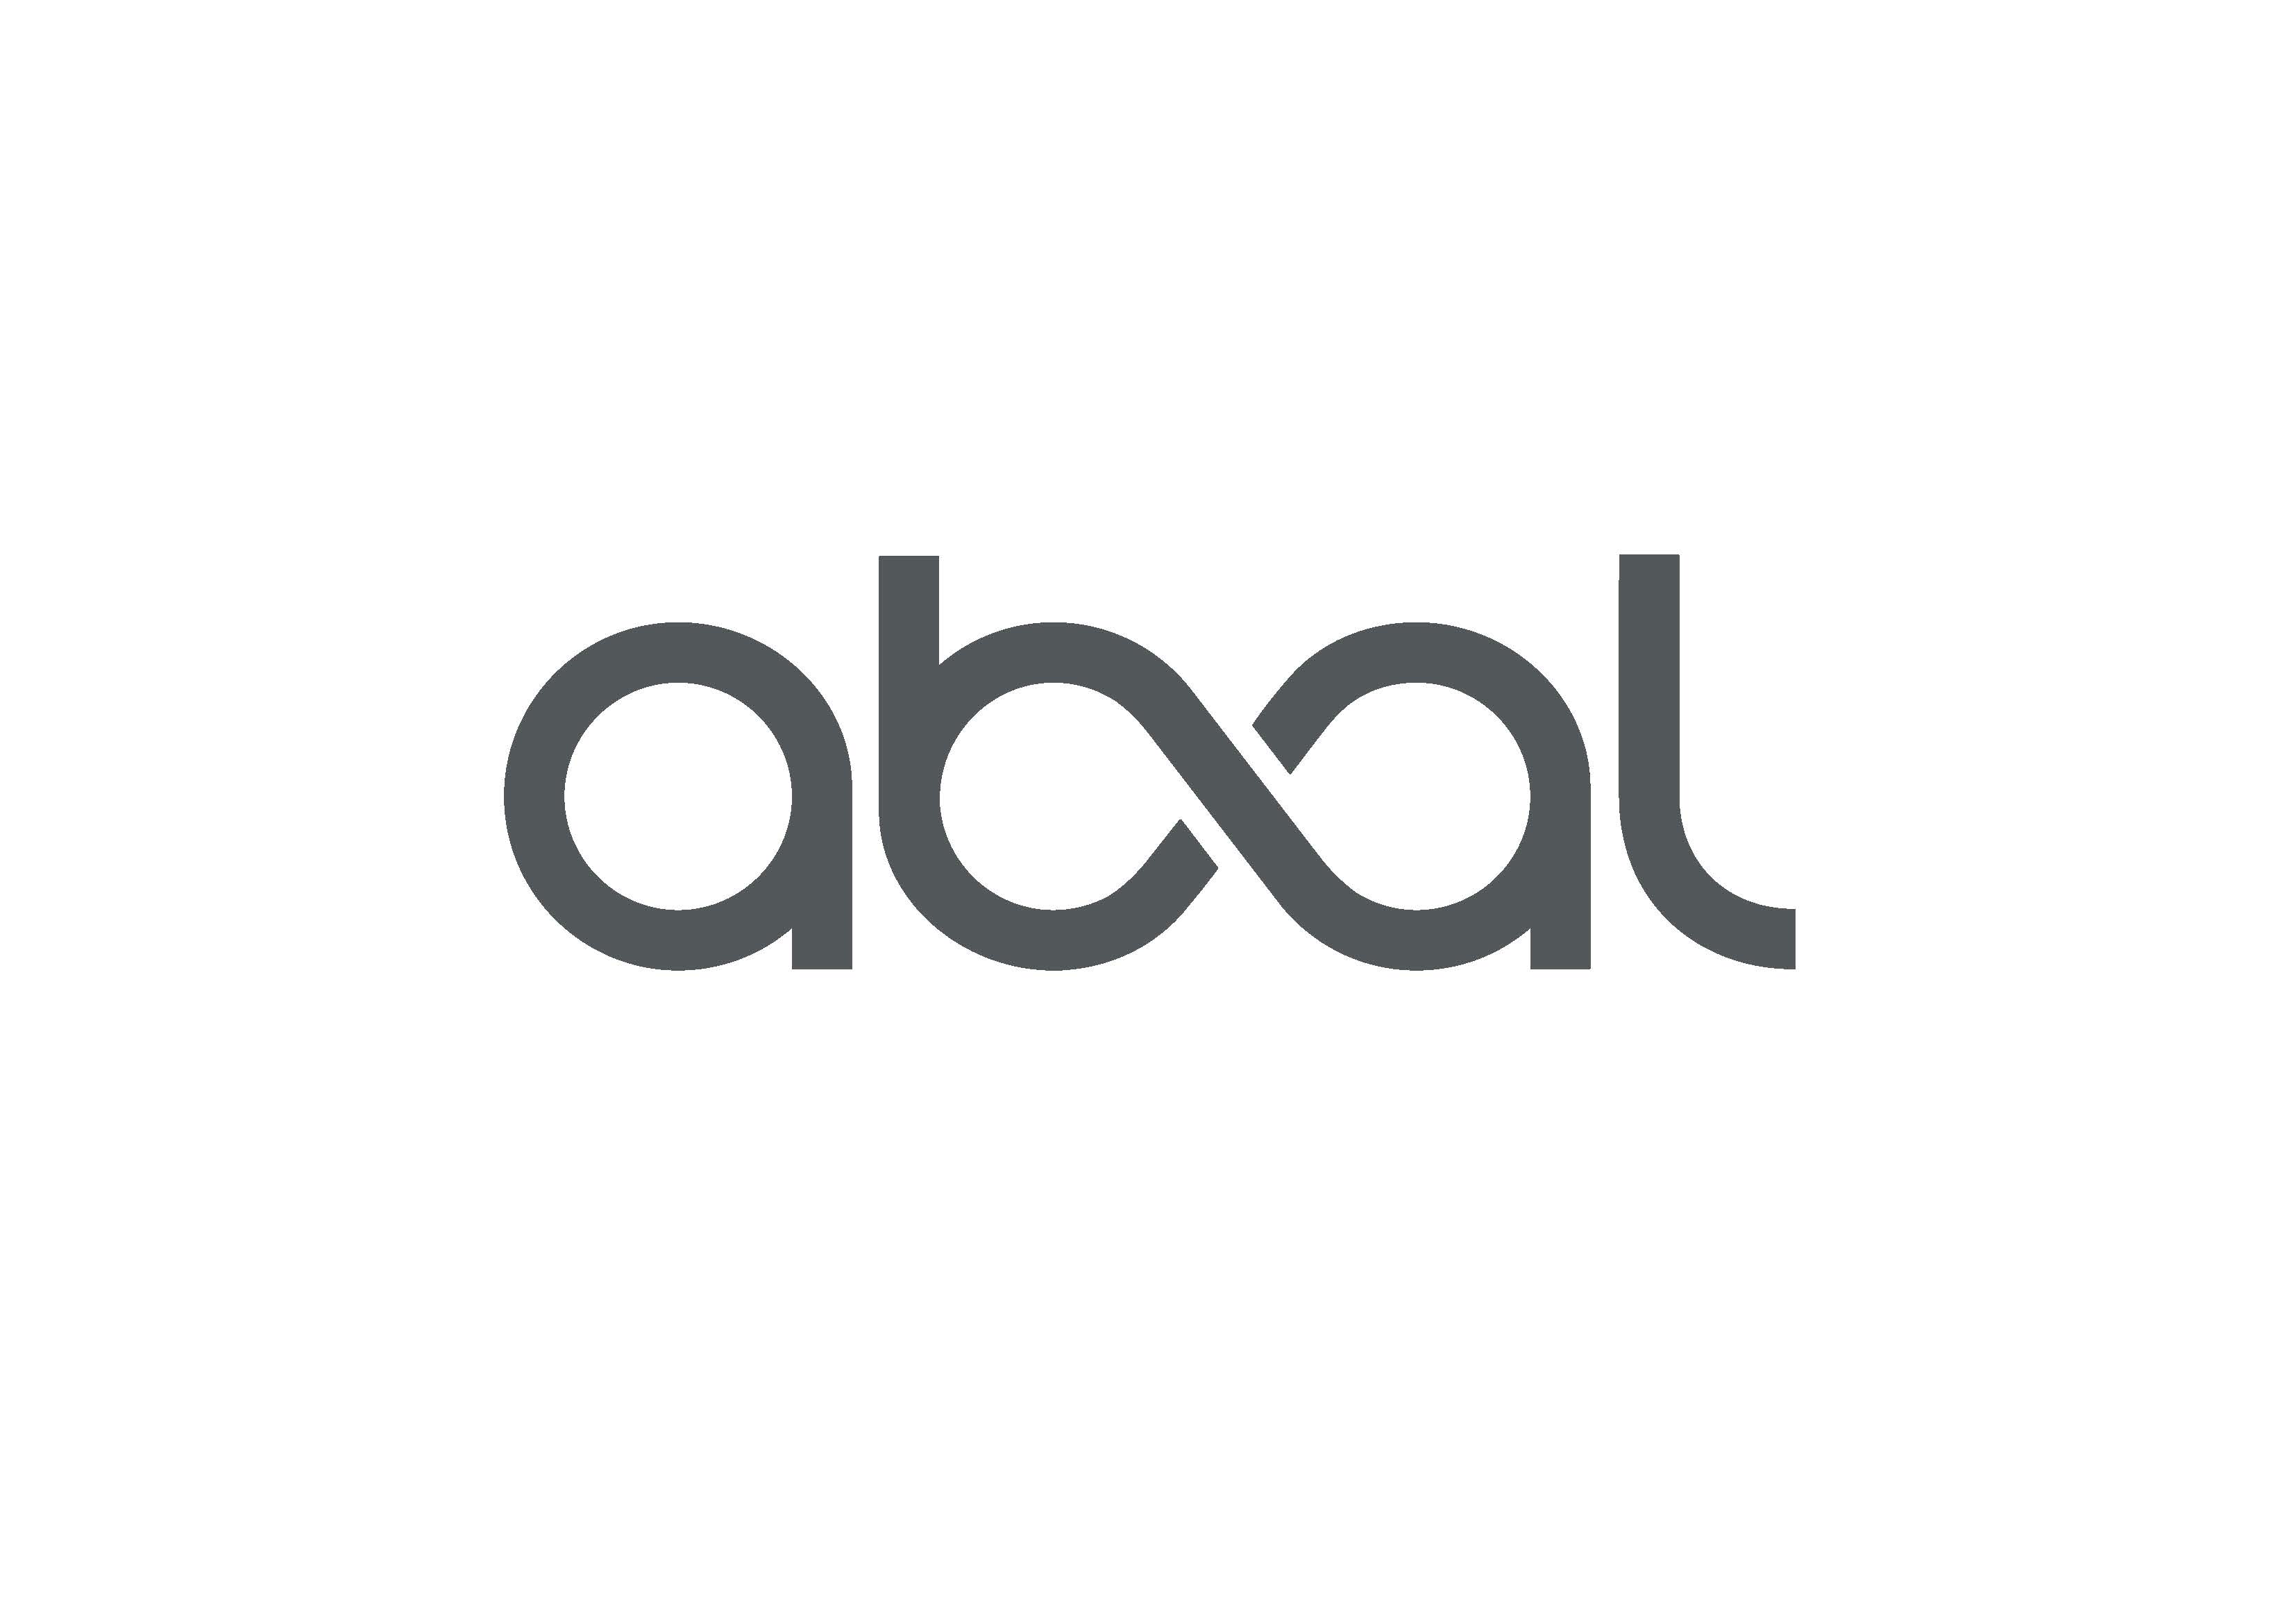 Abal